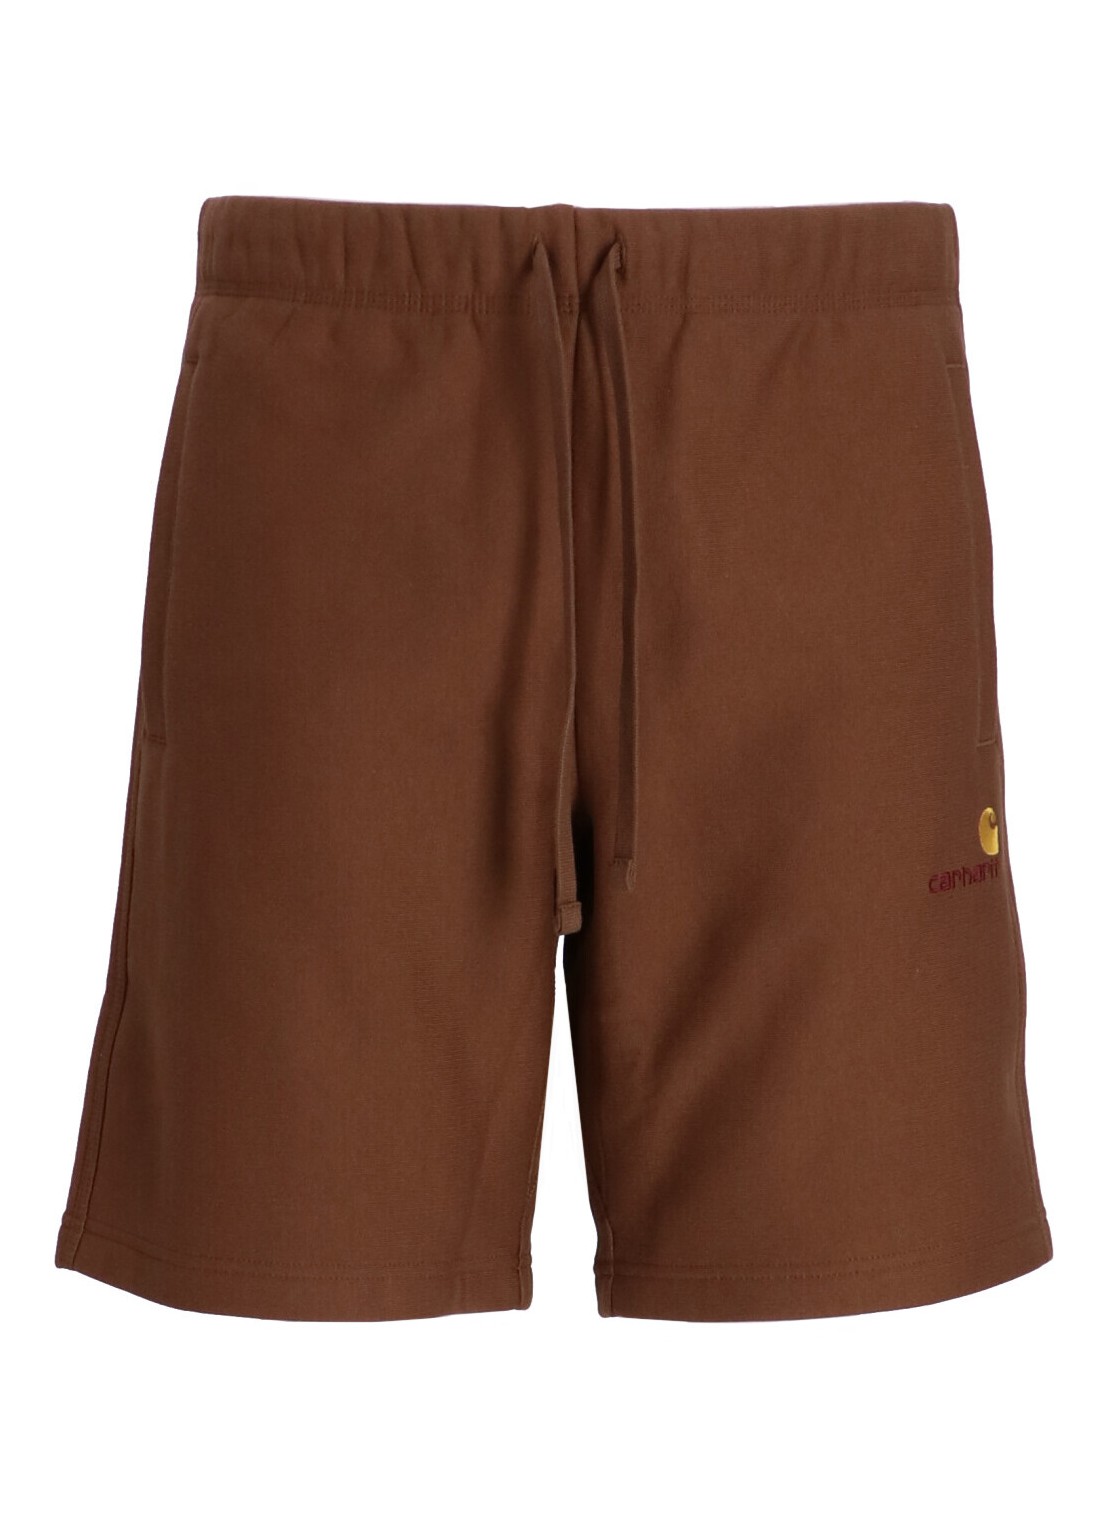 Pantalon corto carhartt short pant manamerican script sweat short - i031685 1zdxx talla M
 